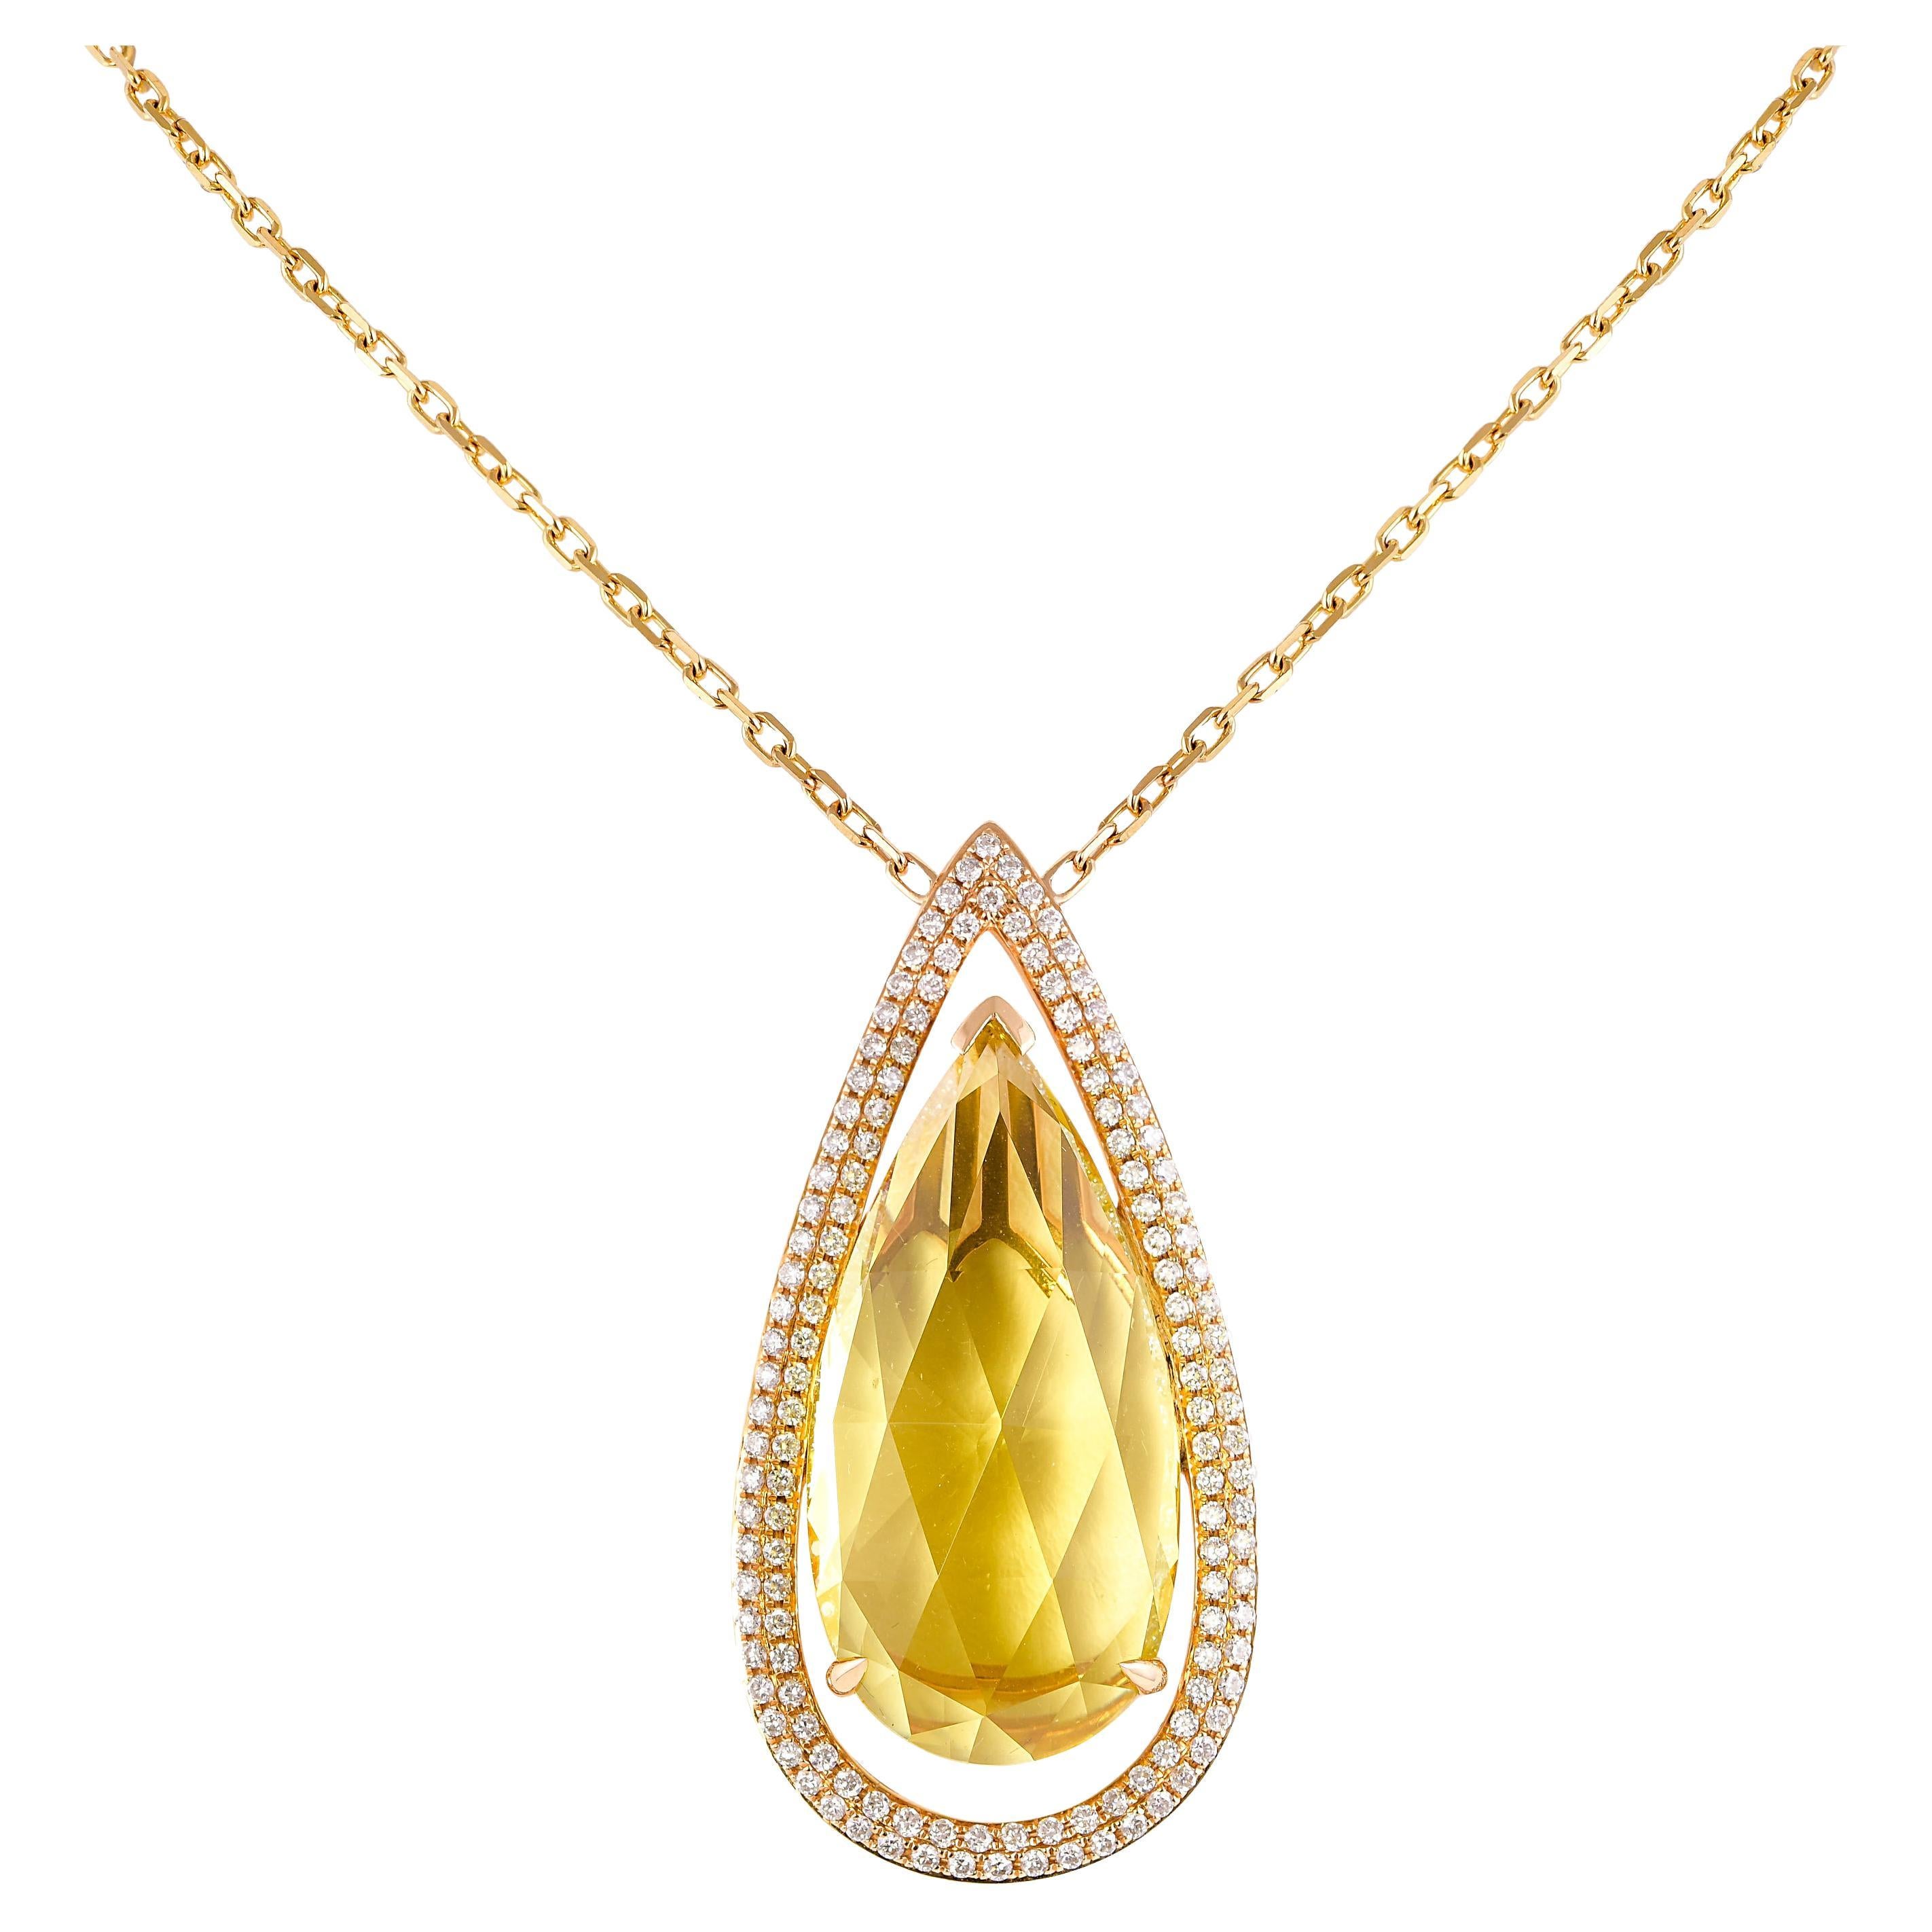 Lemon Quartz Necklace with Diamond in 18 Karat Yellow Gold